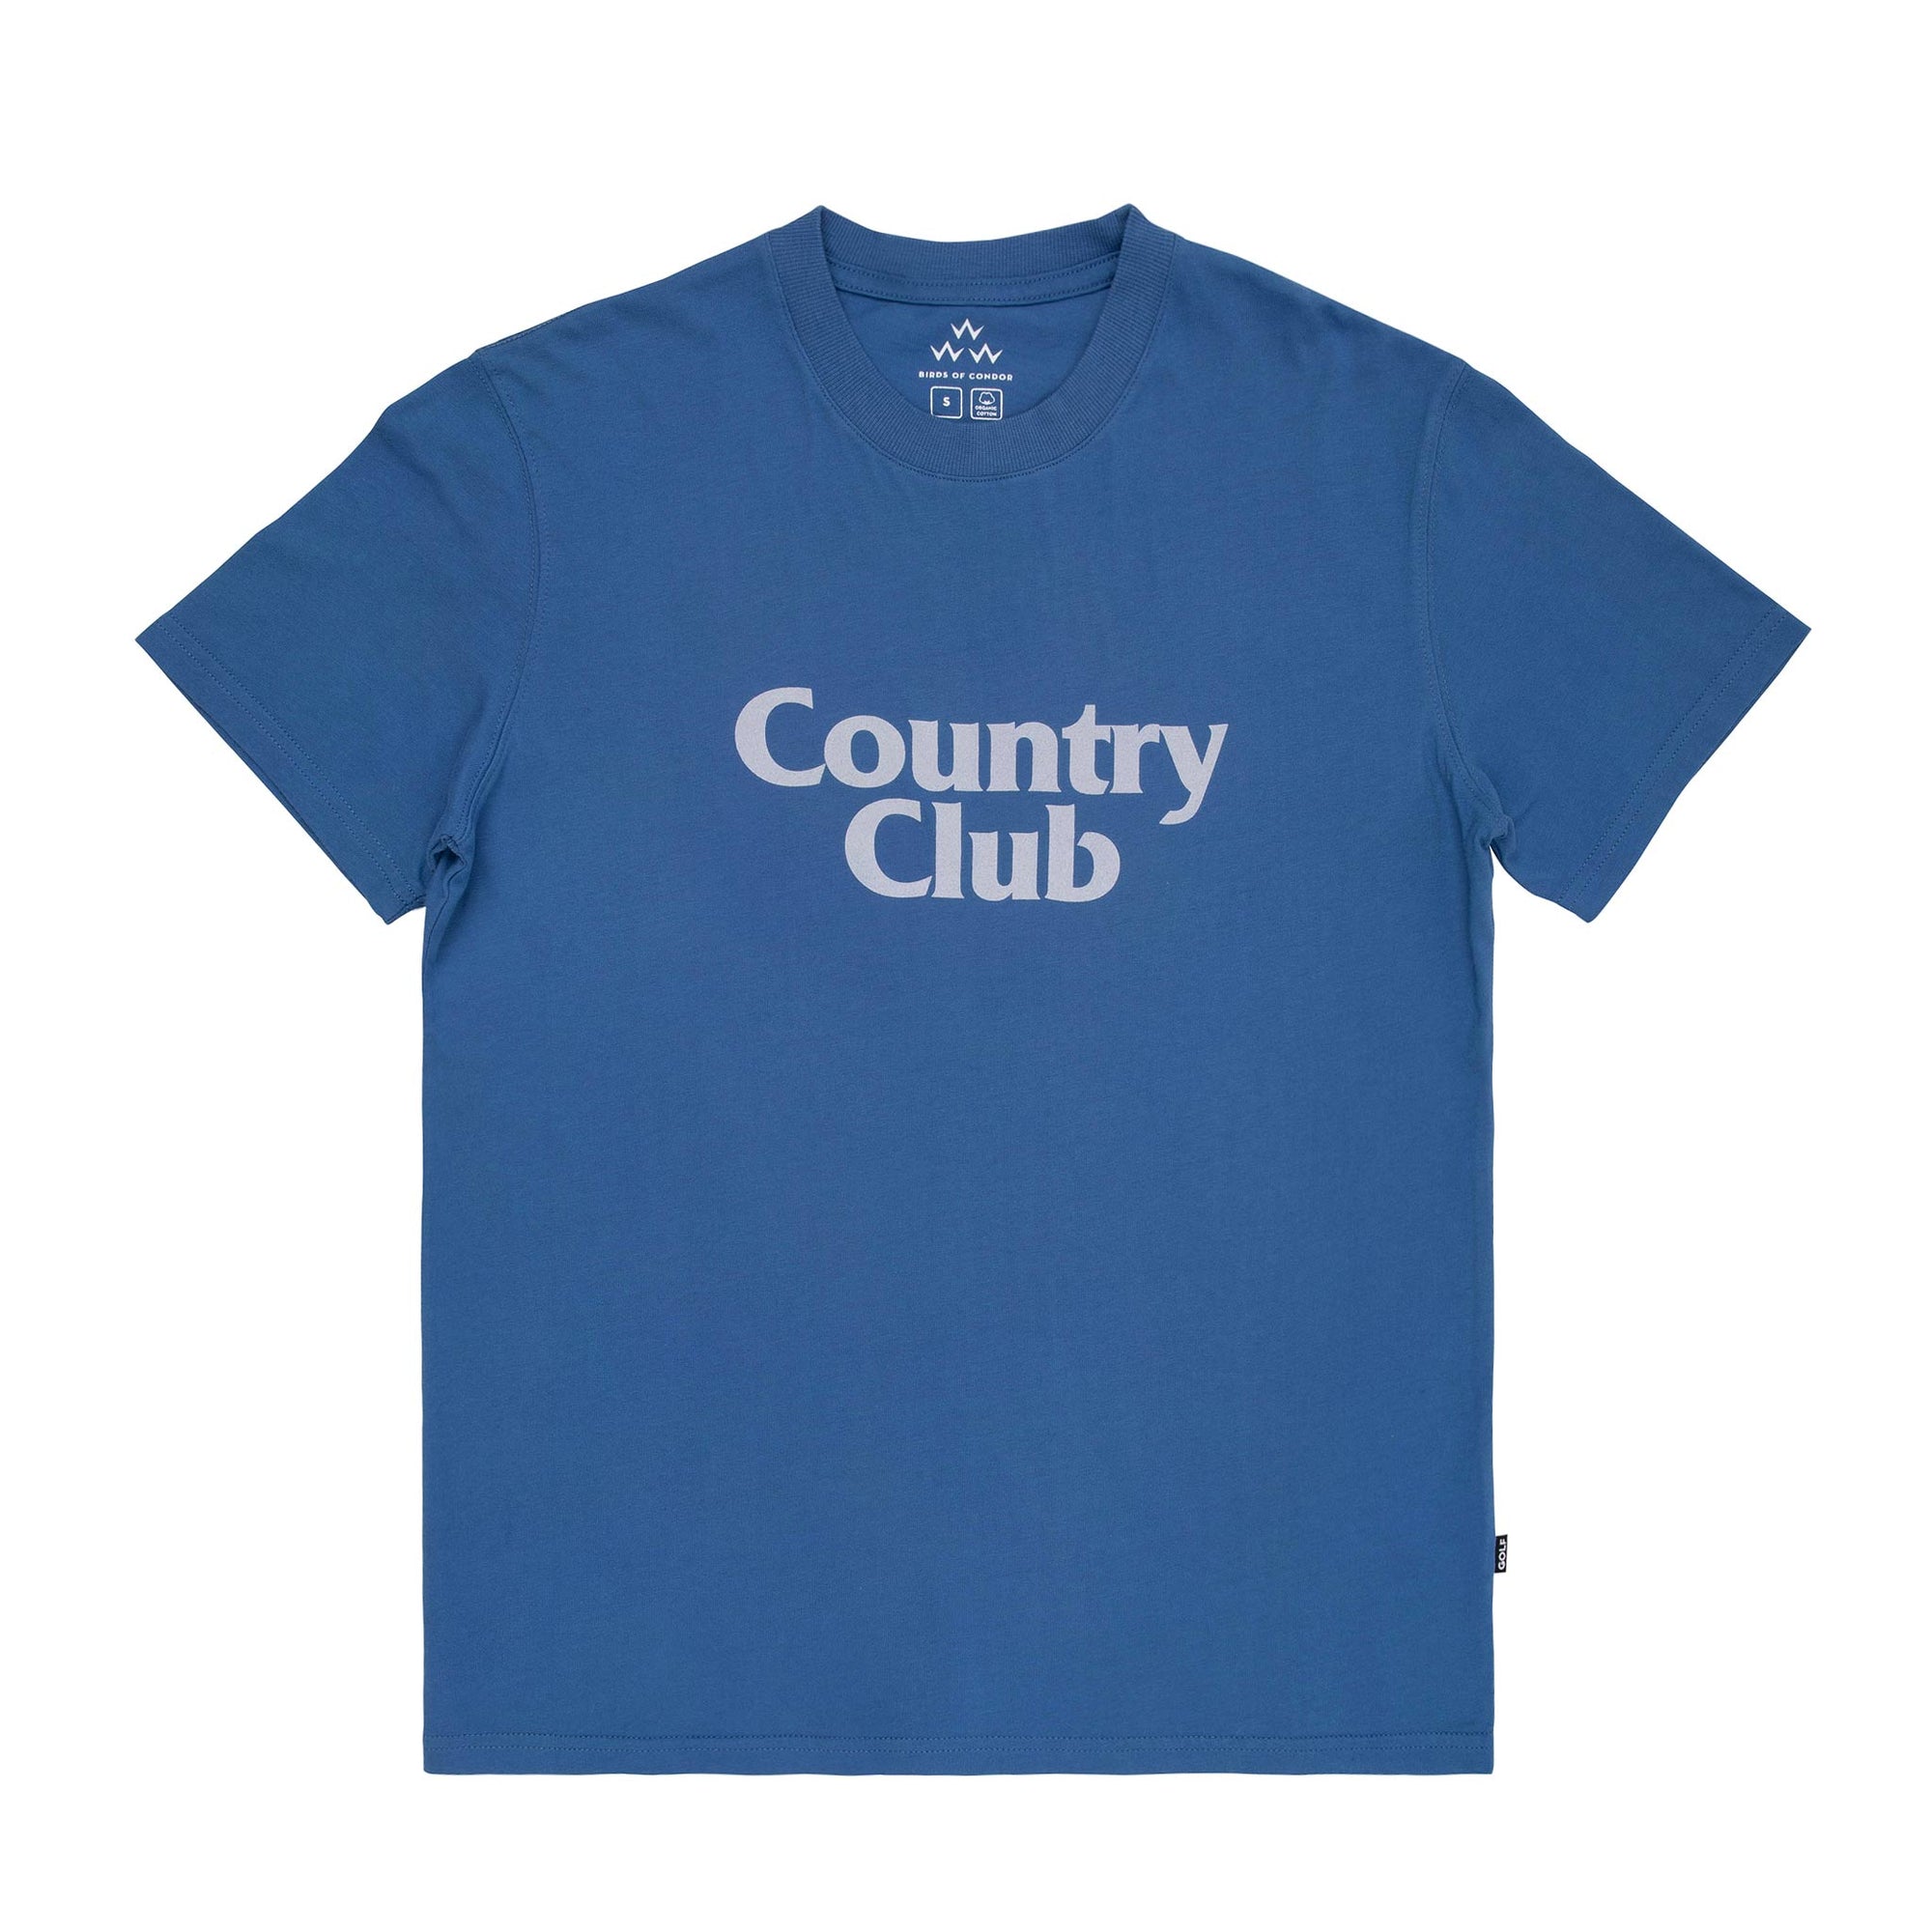 Country Club Tee